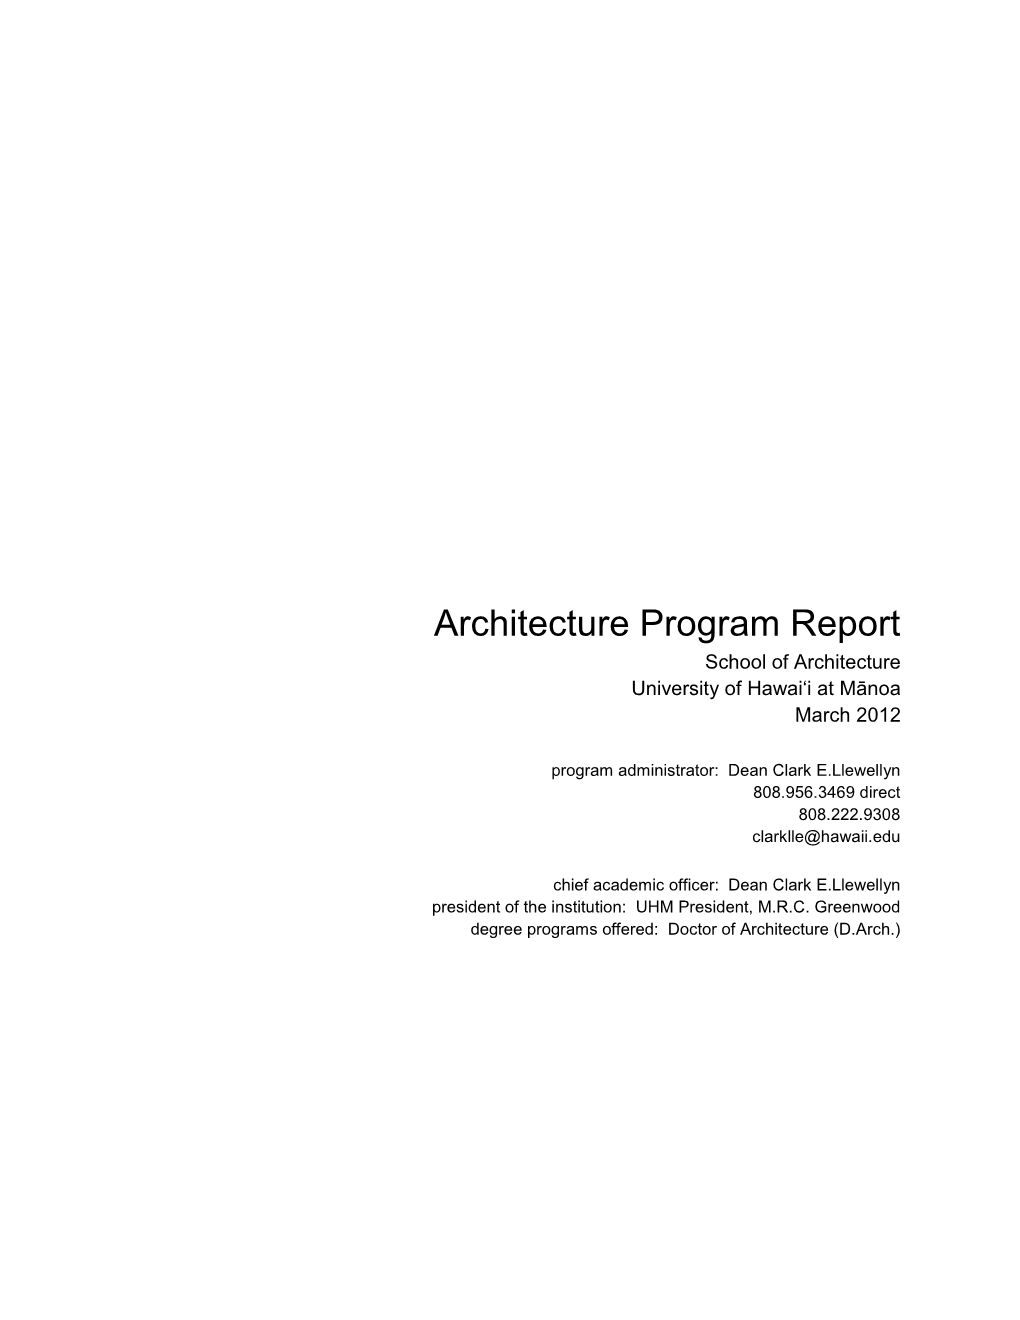 Architecture Program Report School of Architecture University of Hawai‘I at Mānoa March 2012